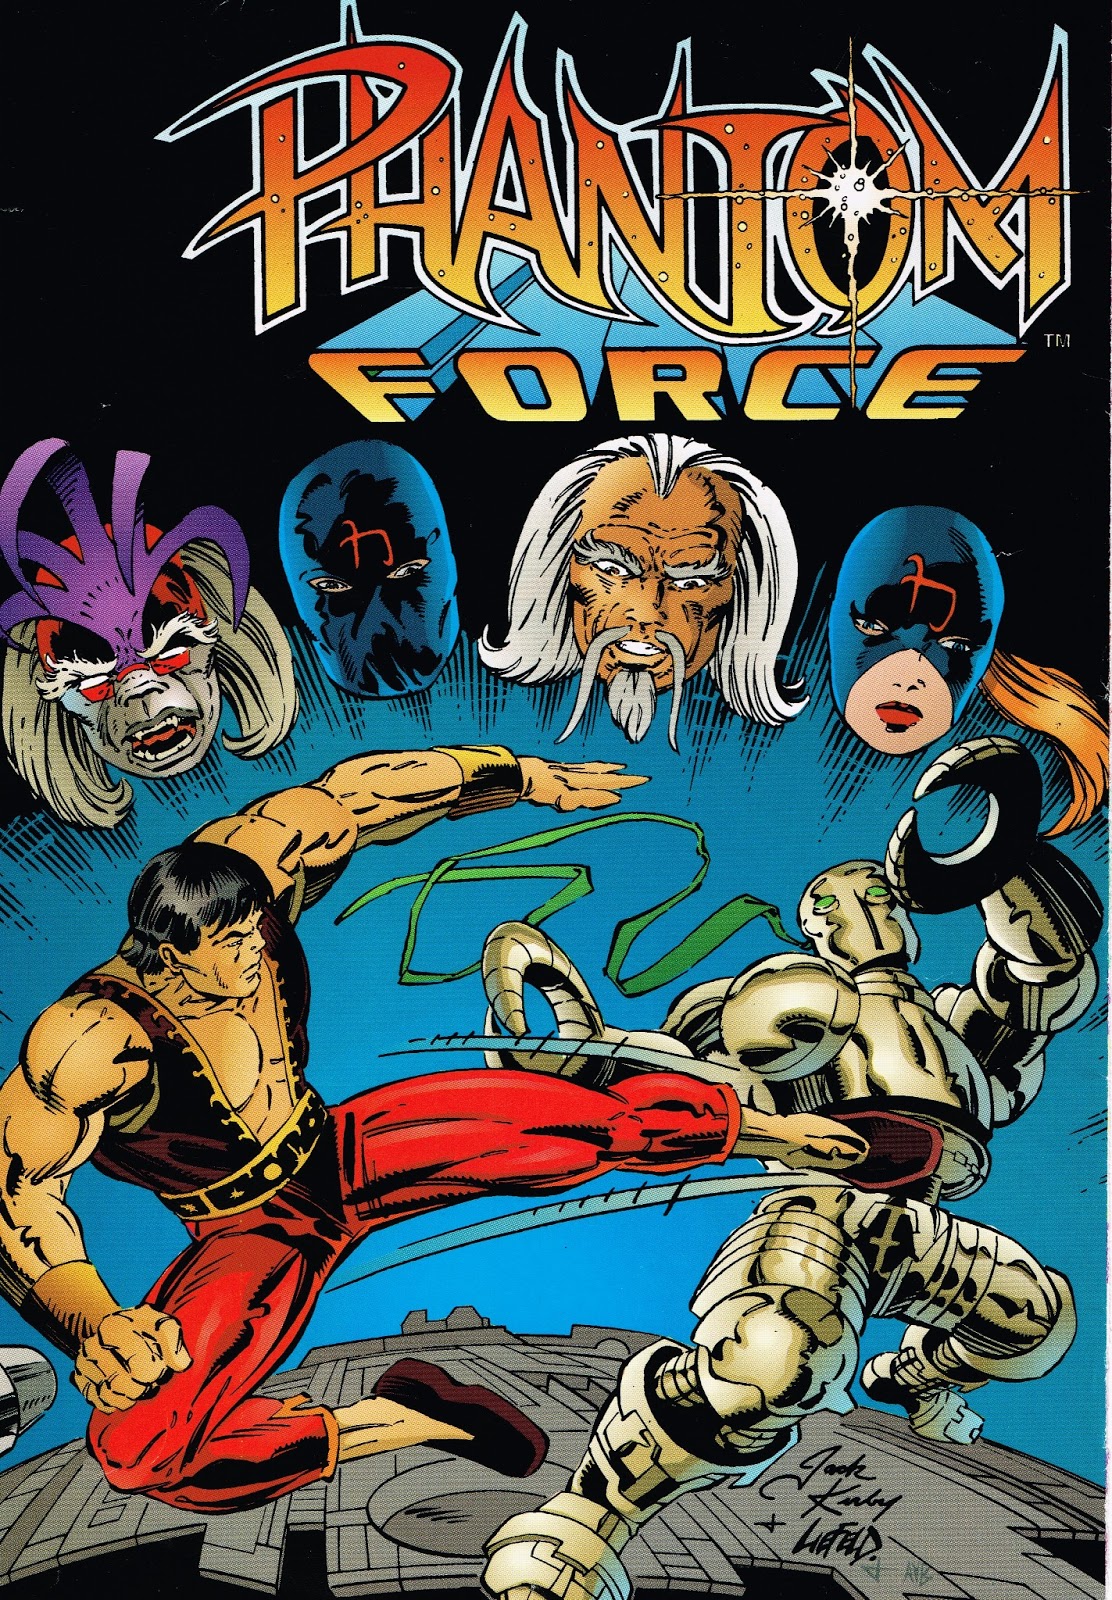 Cap'n's Comics: Phantom Force by Jack Kirby